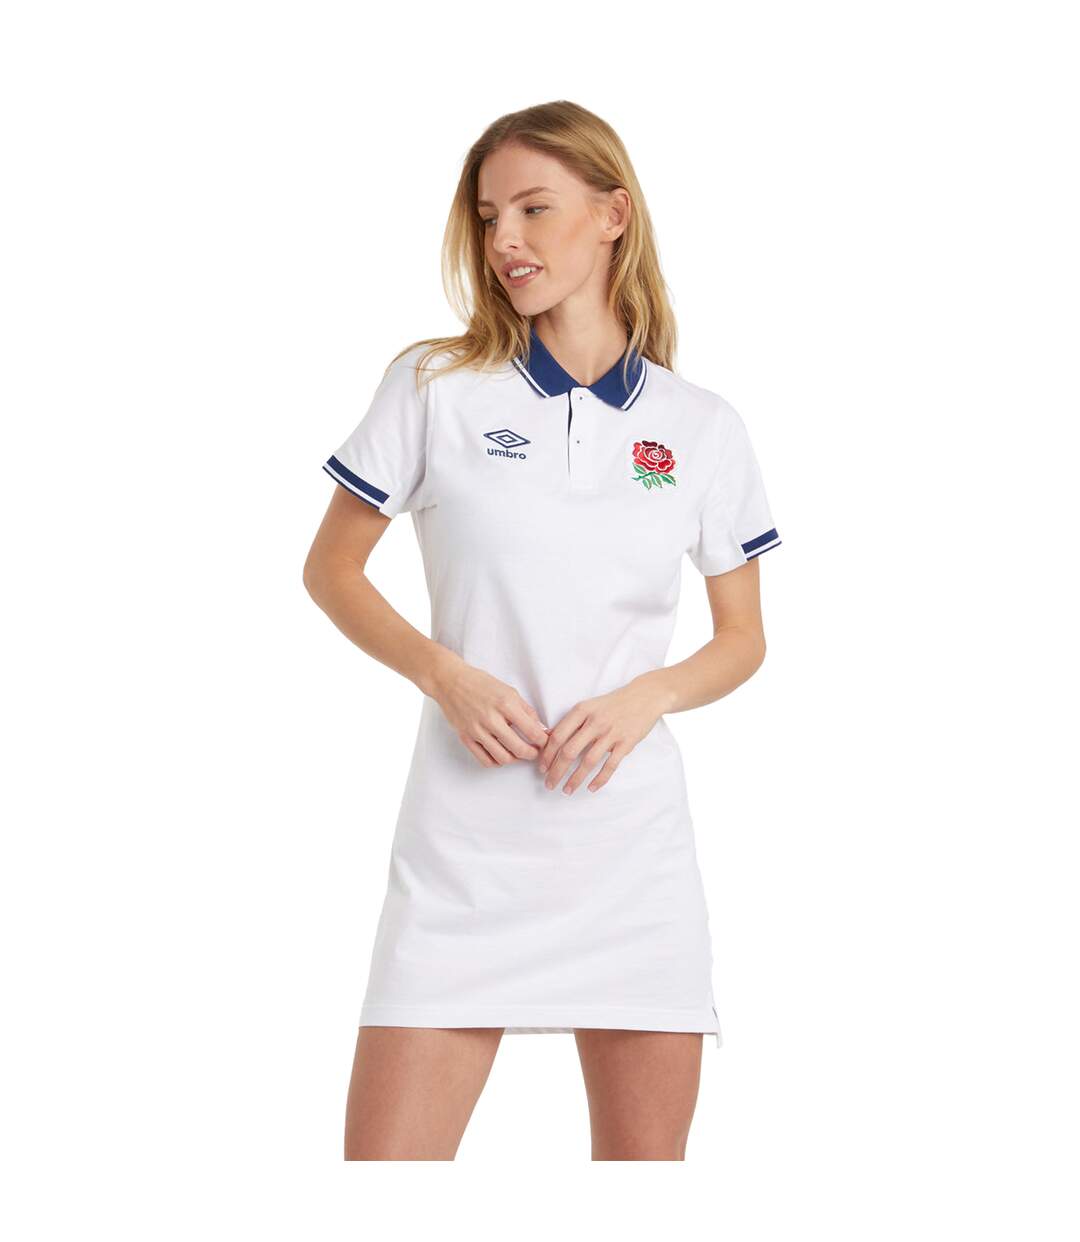 England Rugby - Robe polo CLASSIC - Femme (Blanc / Bleu marine) - UTUO936